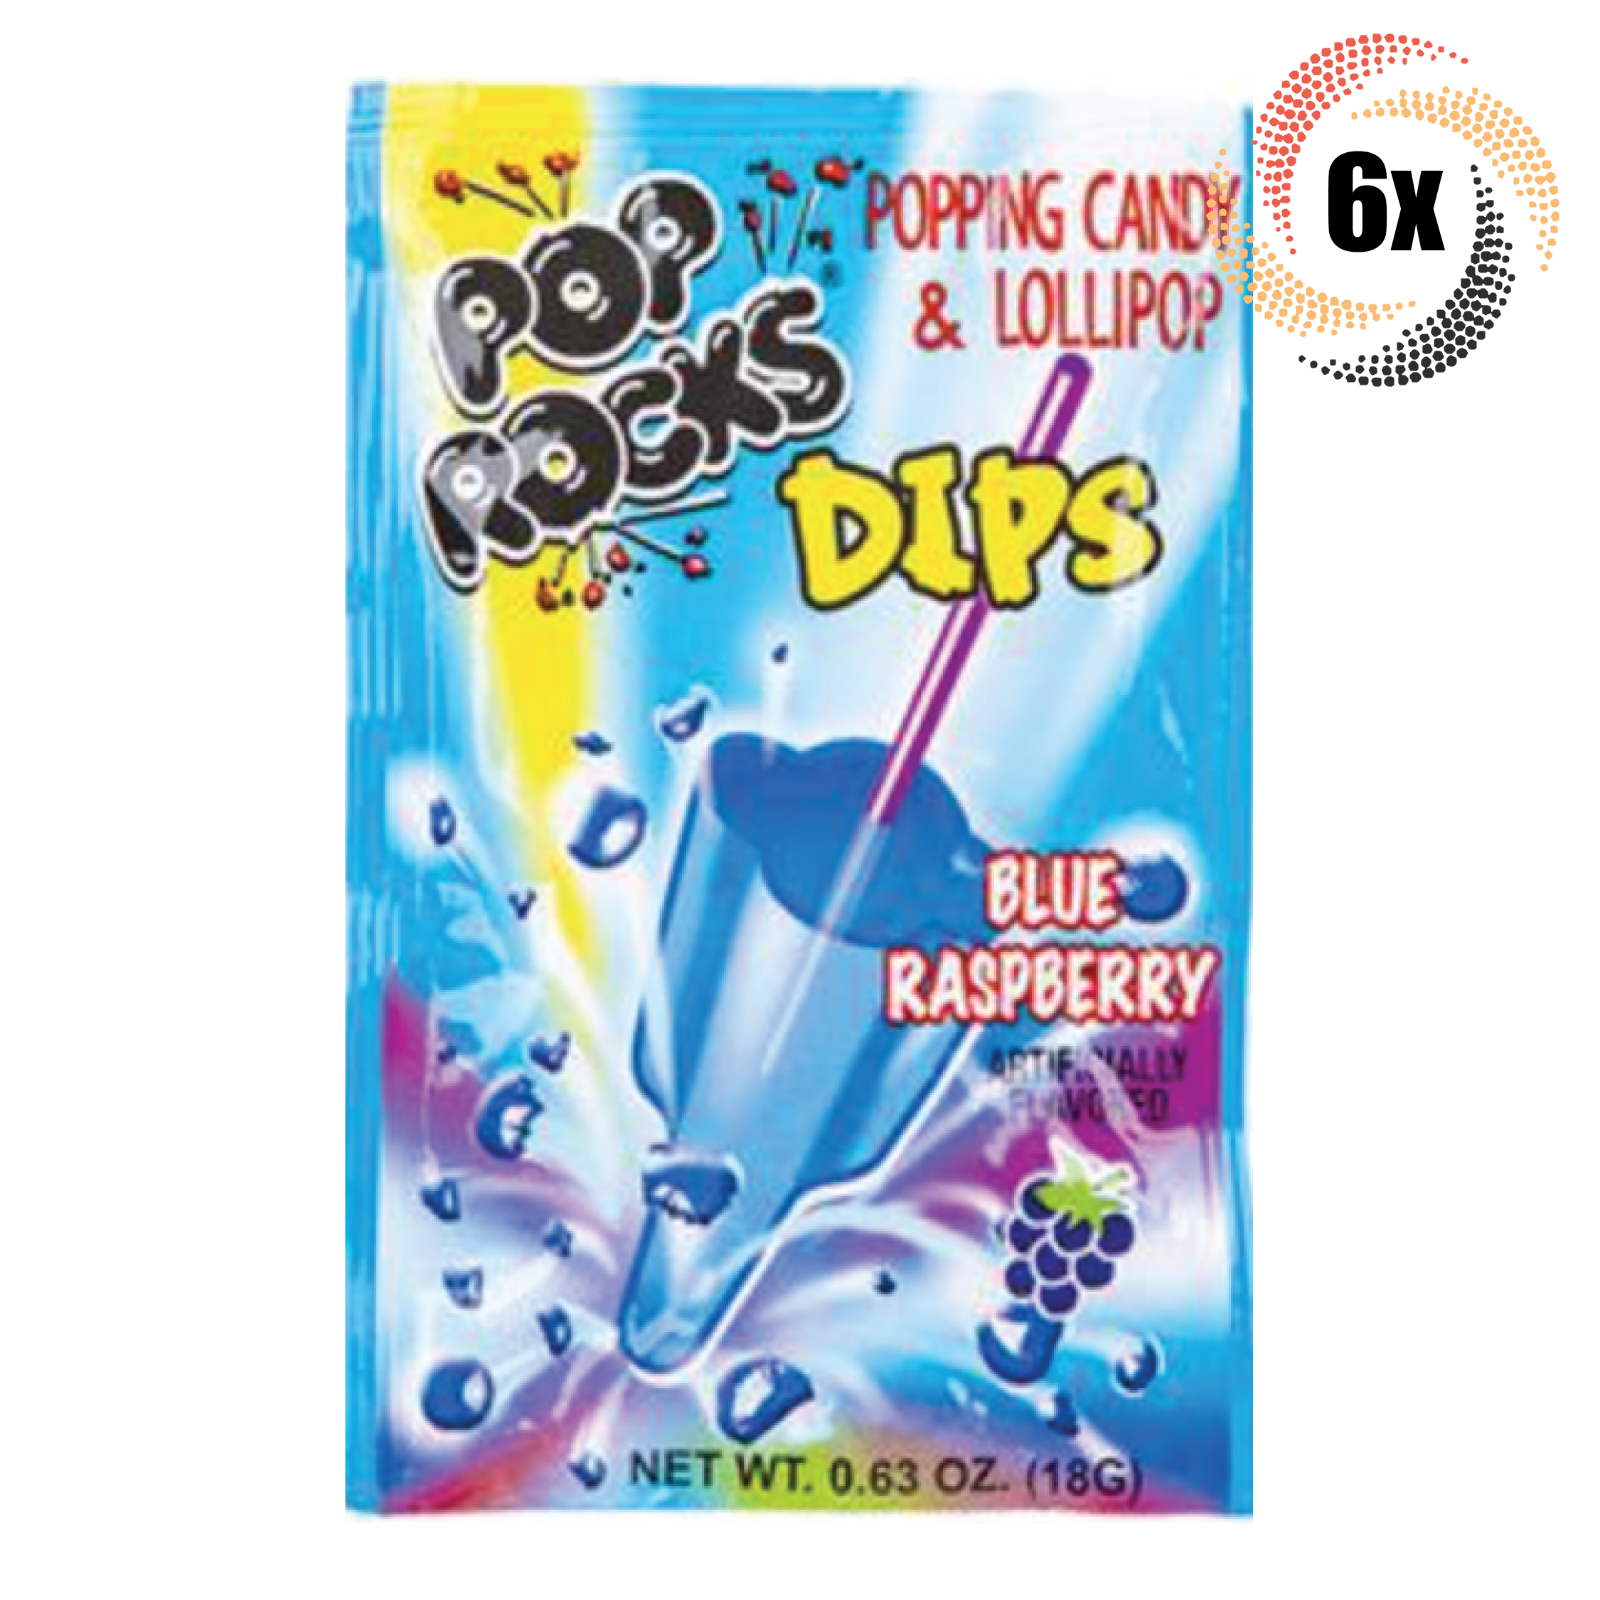 6x Packs Pop Rocks Dips Blue Raspberry Popping Candy With Lollipop | .63oz - $10.76